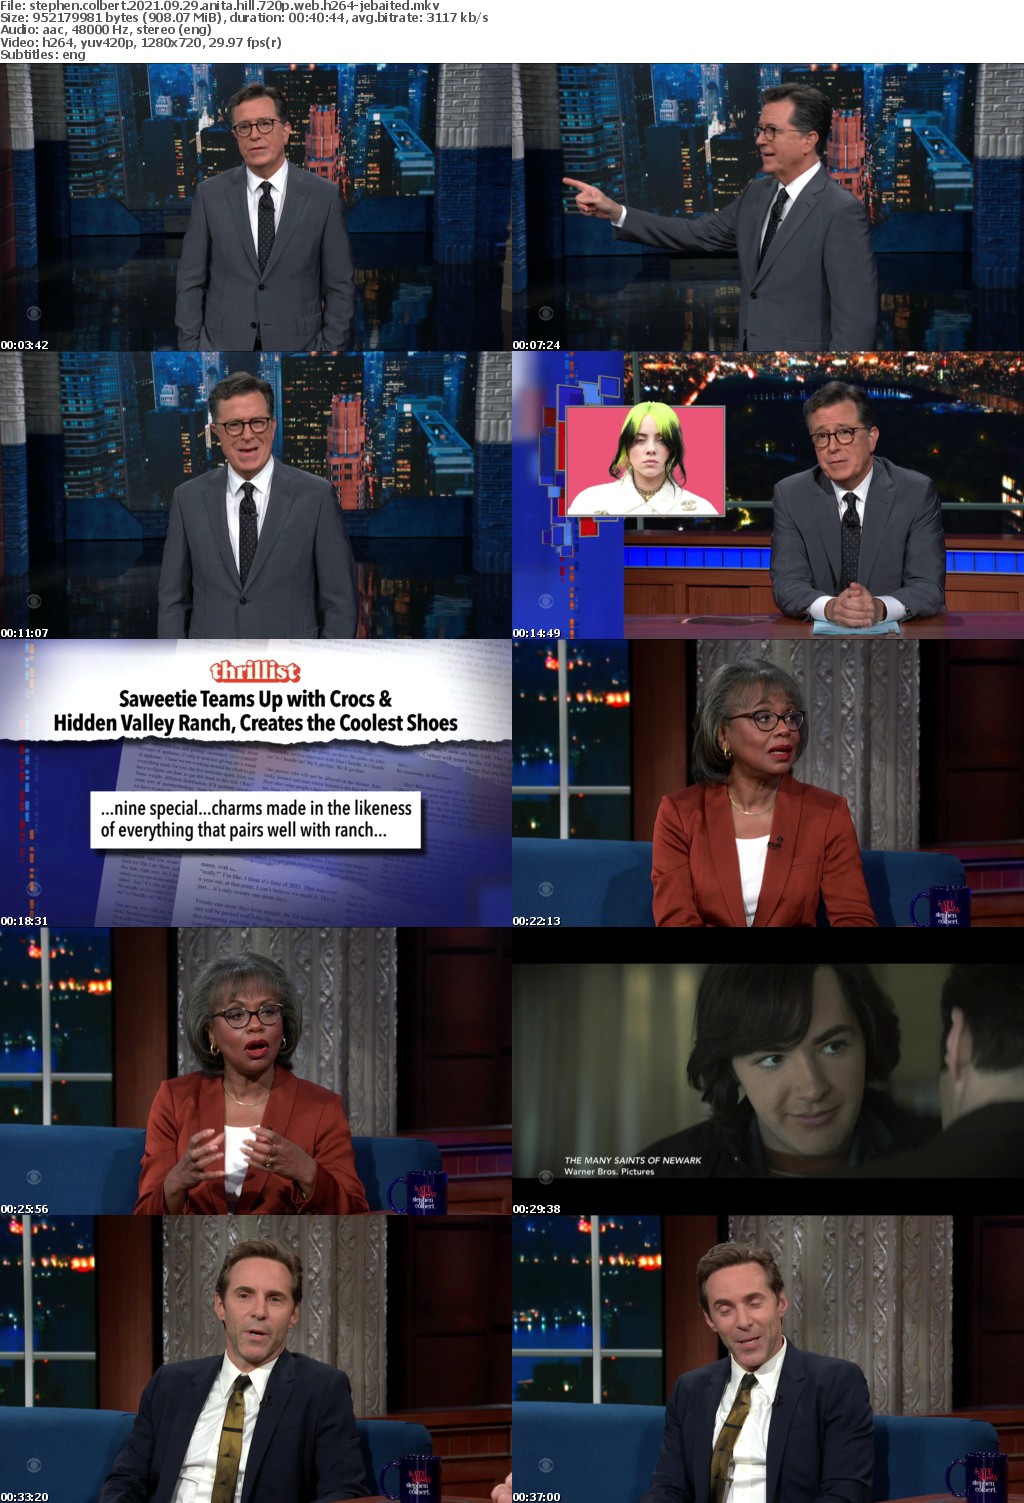 Stephen Colbert 2021 09 29 Anita Hill 720p WEB H264-JEBAITED